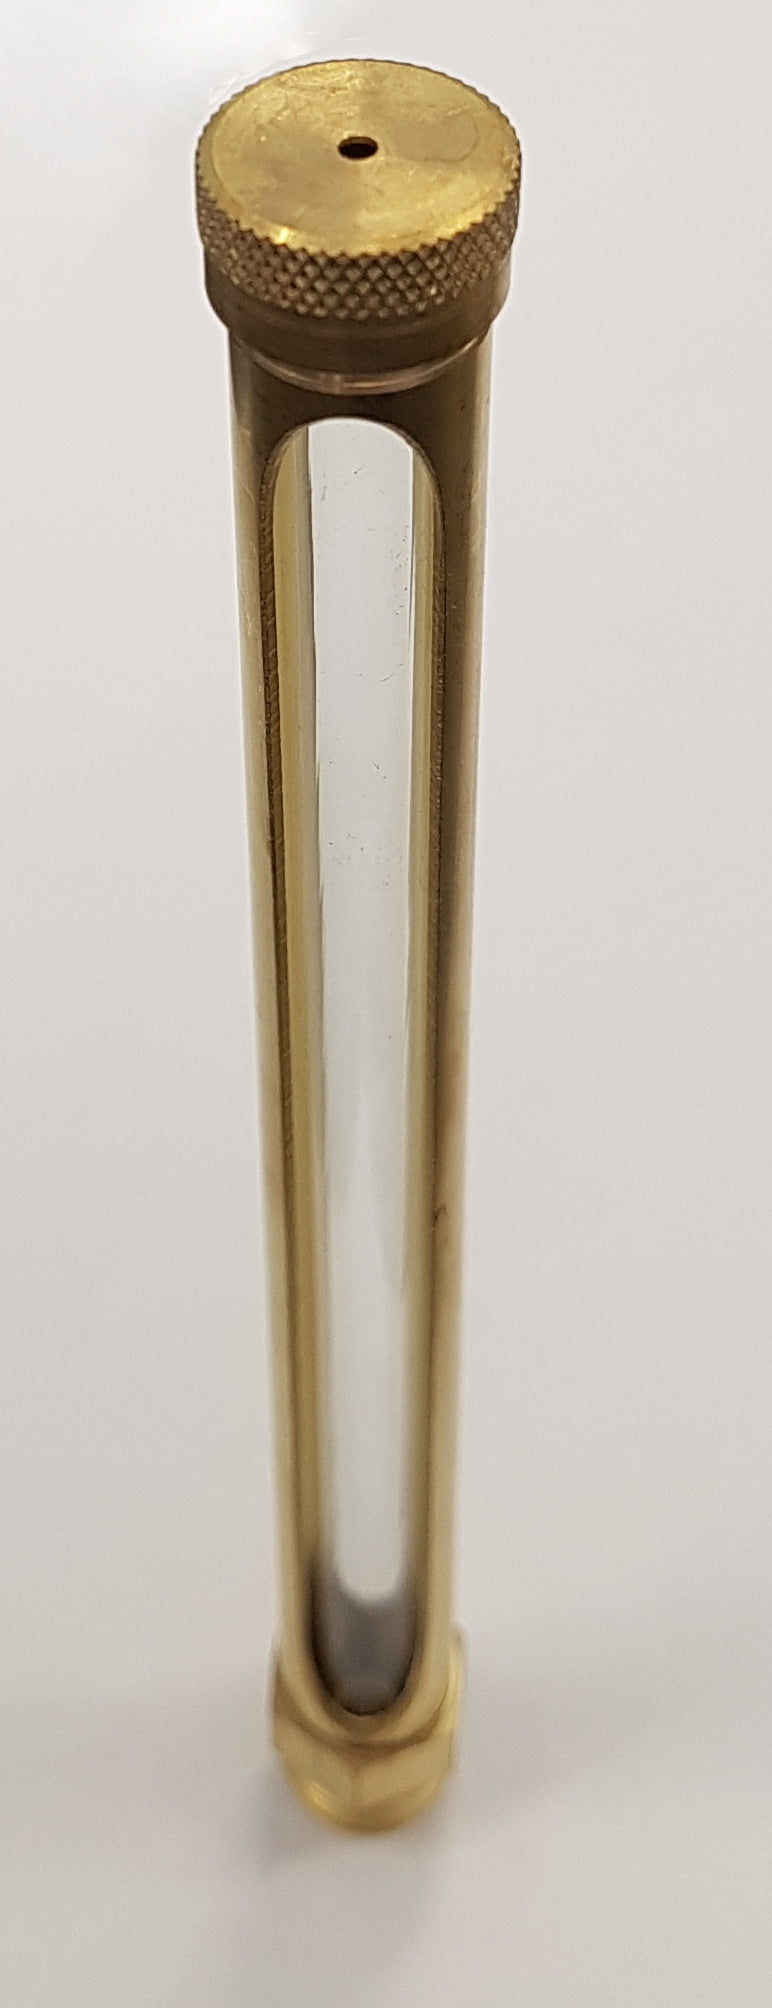 Brass straight oil position indicator type 226 - 150 x 1/4 BSP